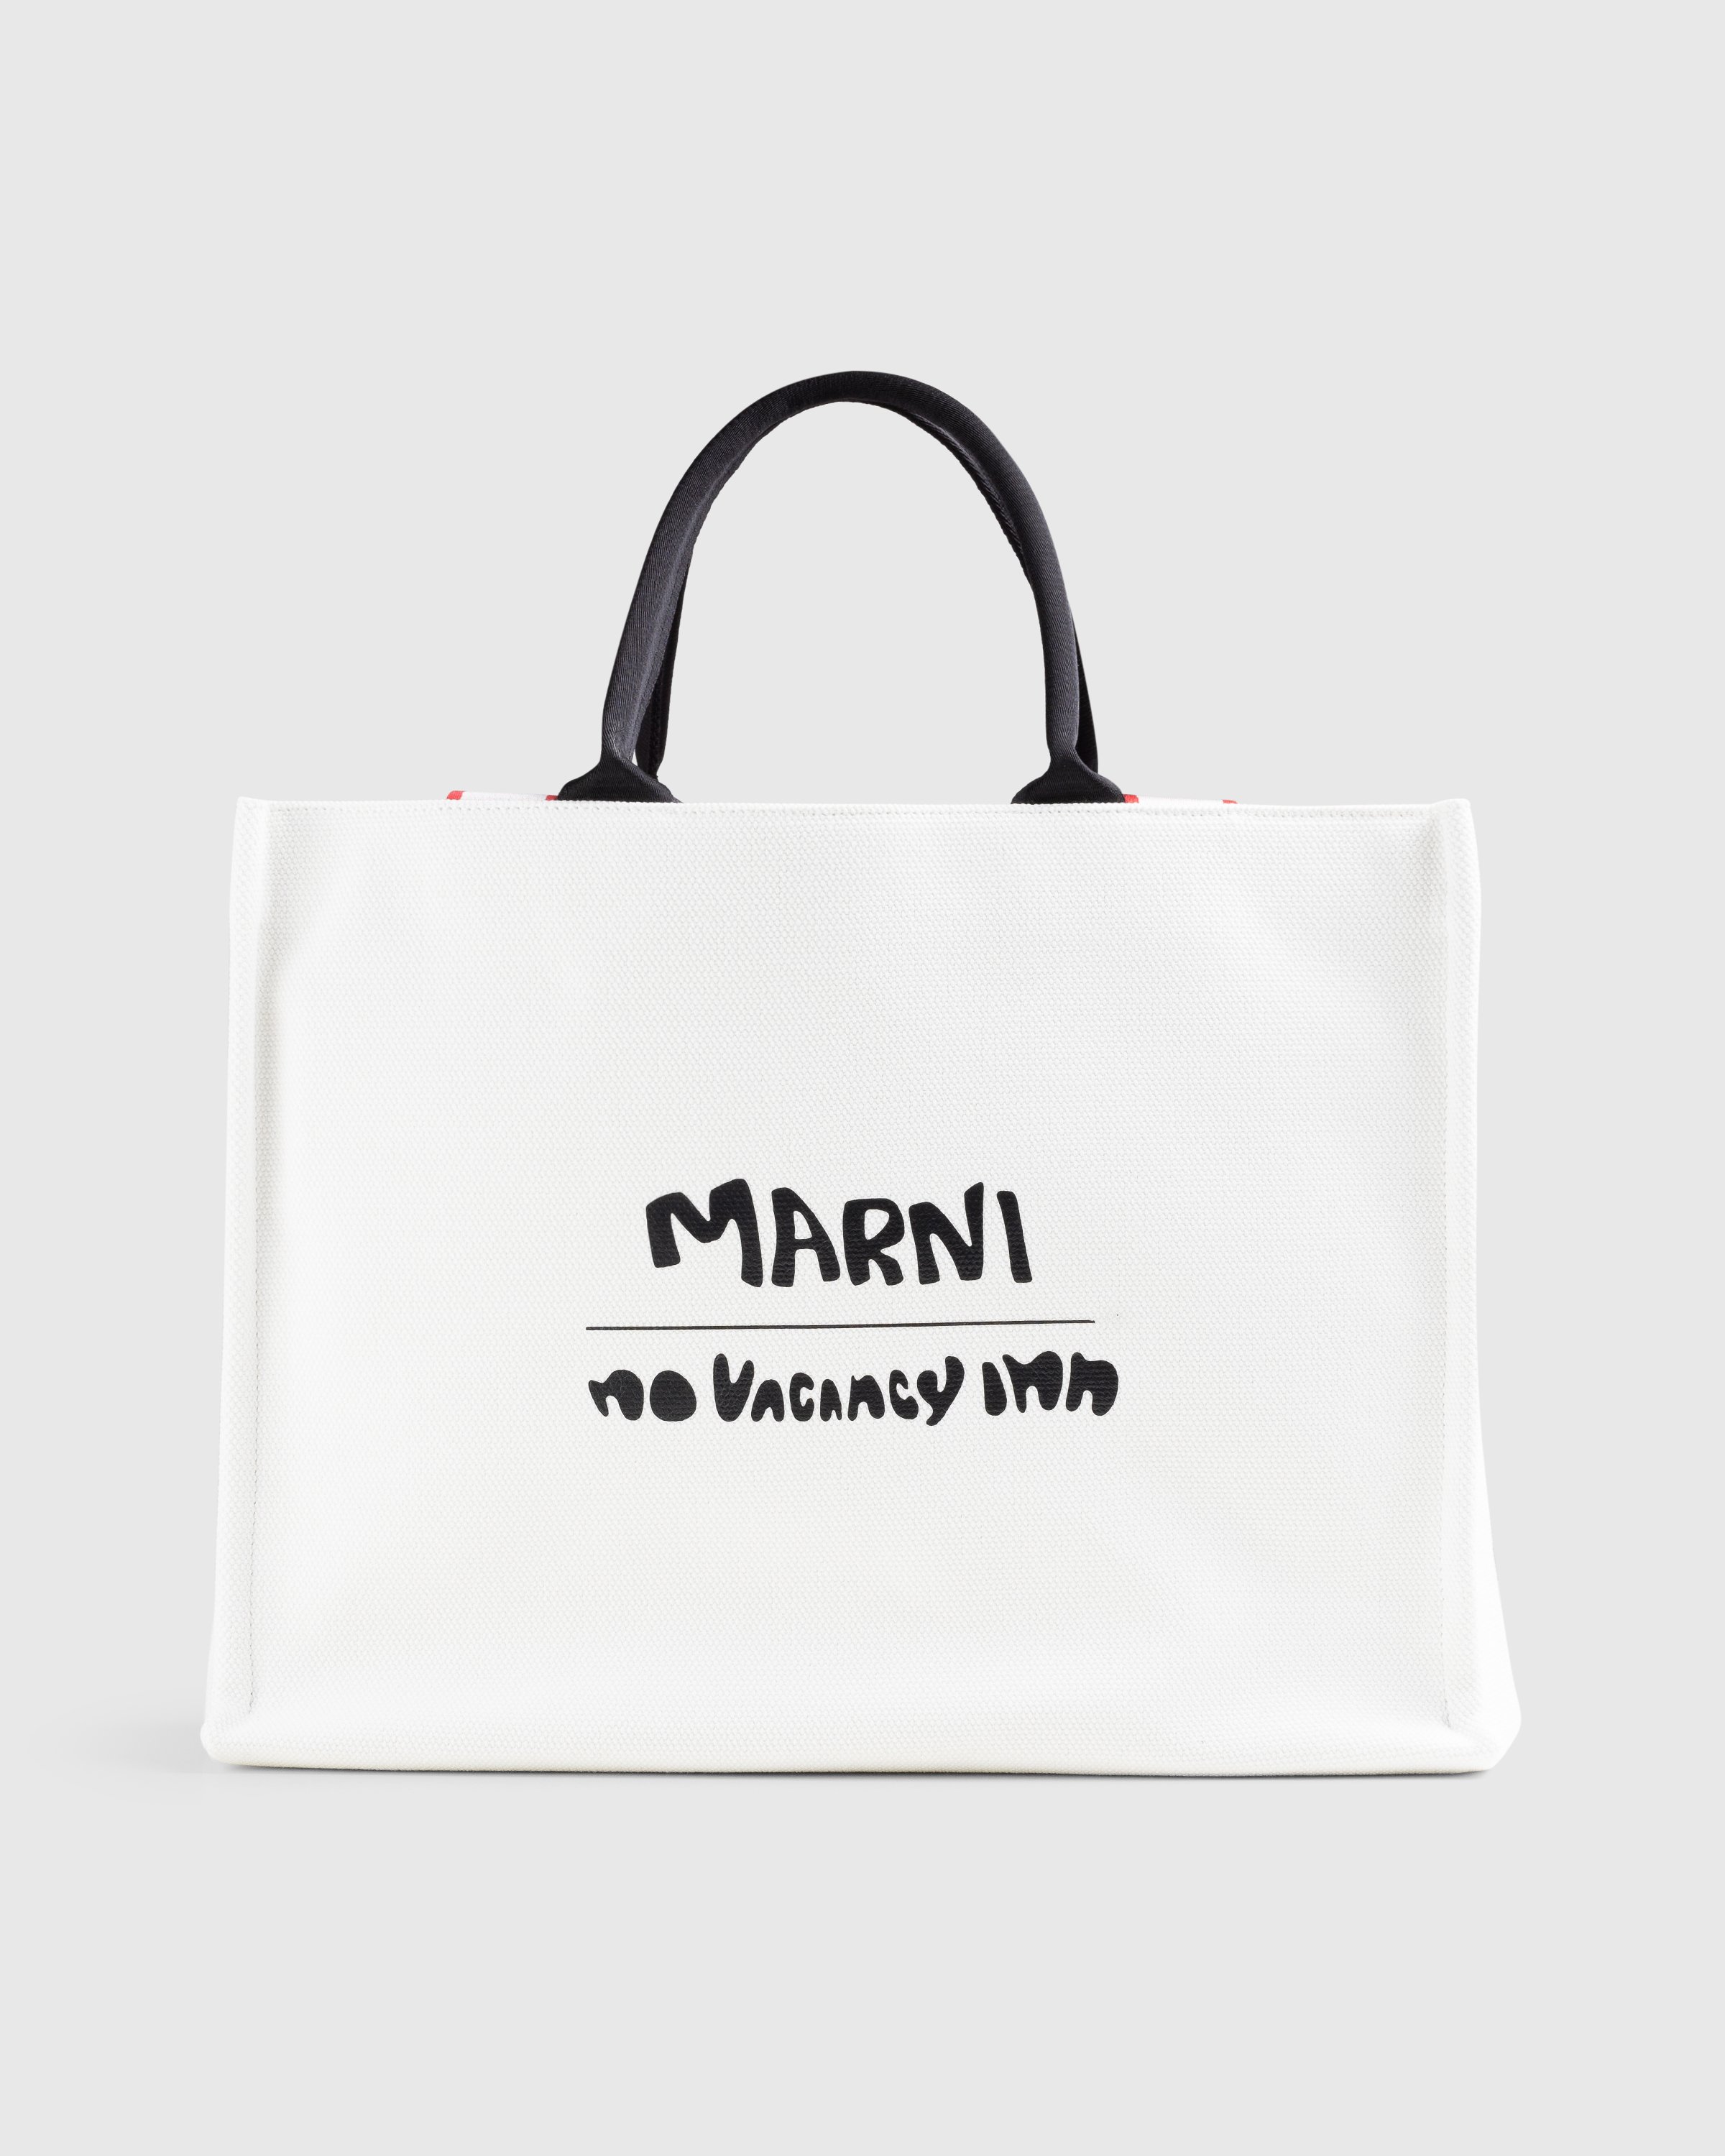 Marni x No Vacancy Inn - Bey Tote Bag Shell/Black - Accessories - White - Image 1